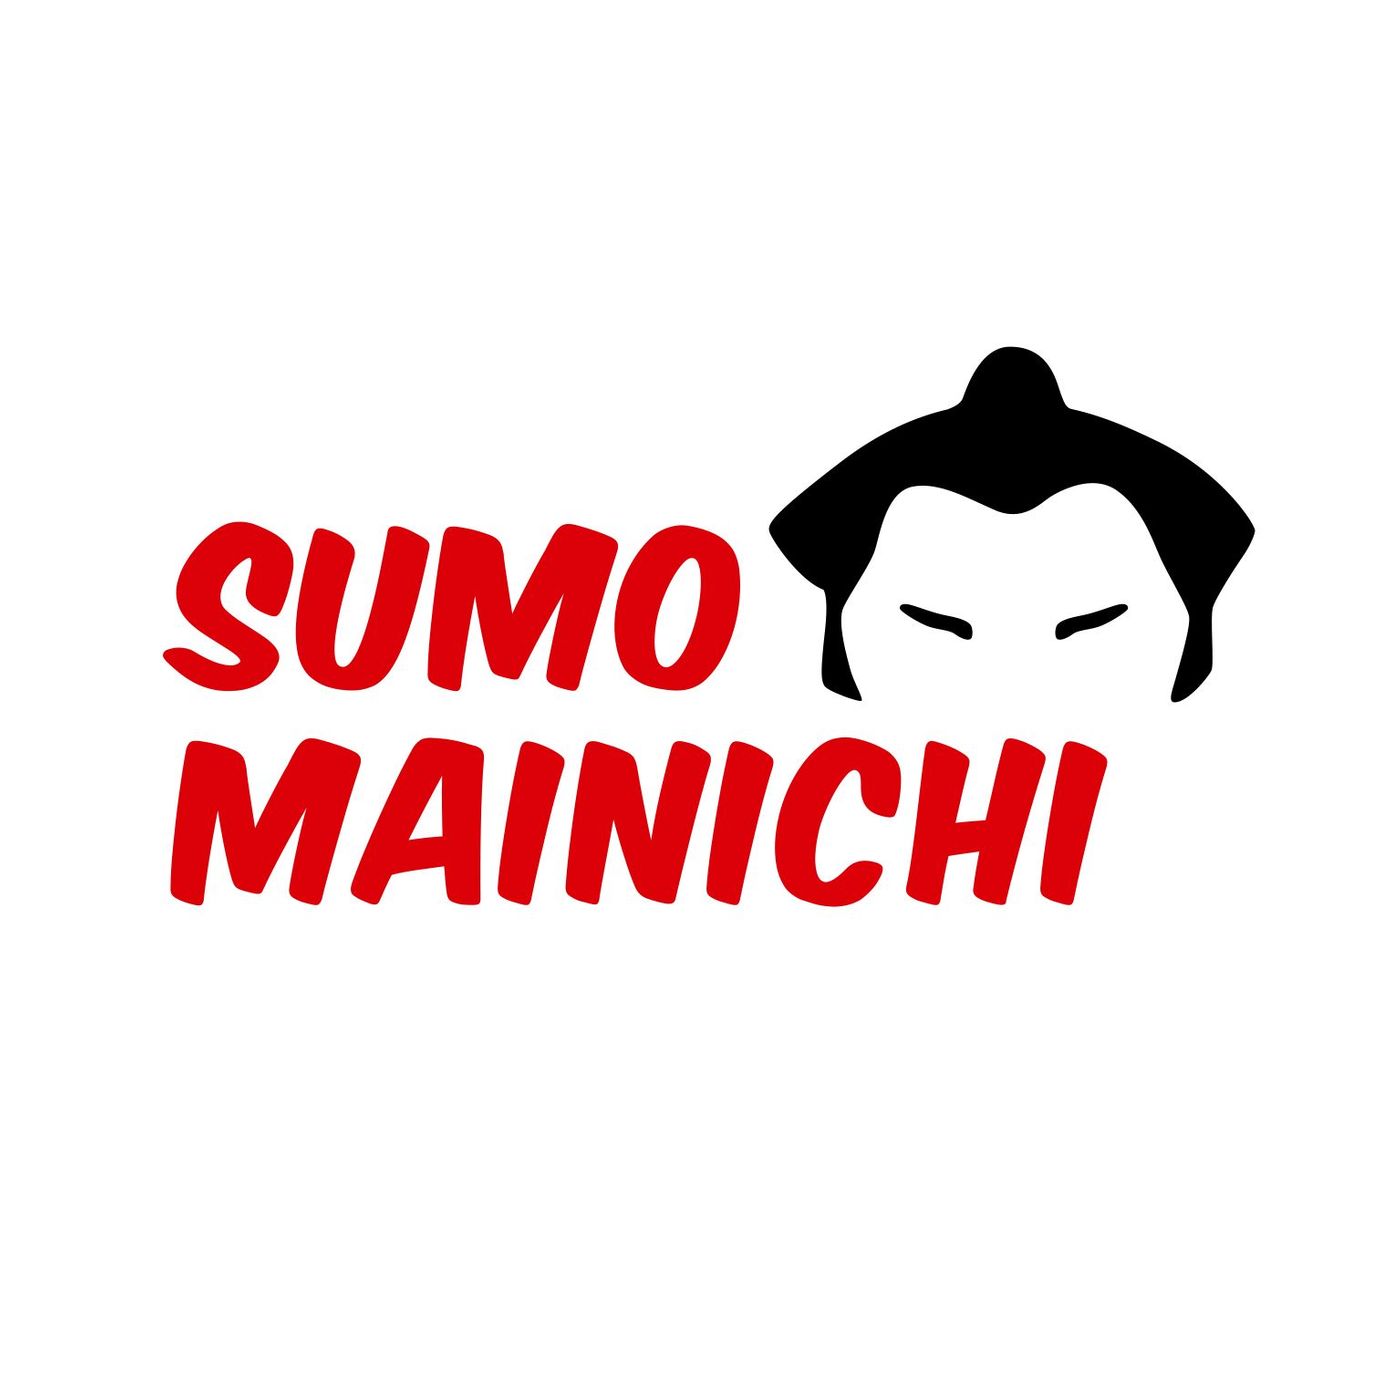 Sumo Mainichi - Day 2 - July 2021